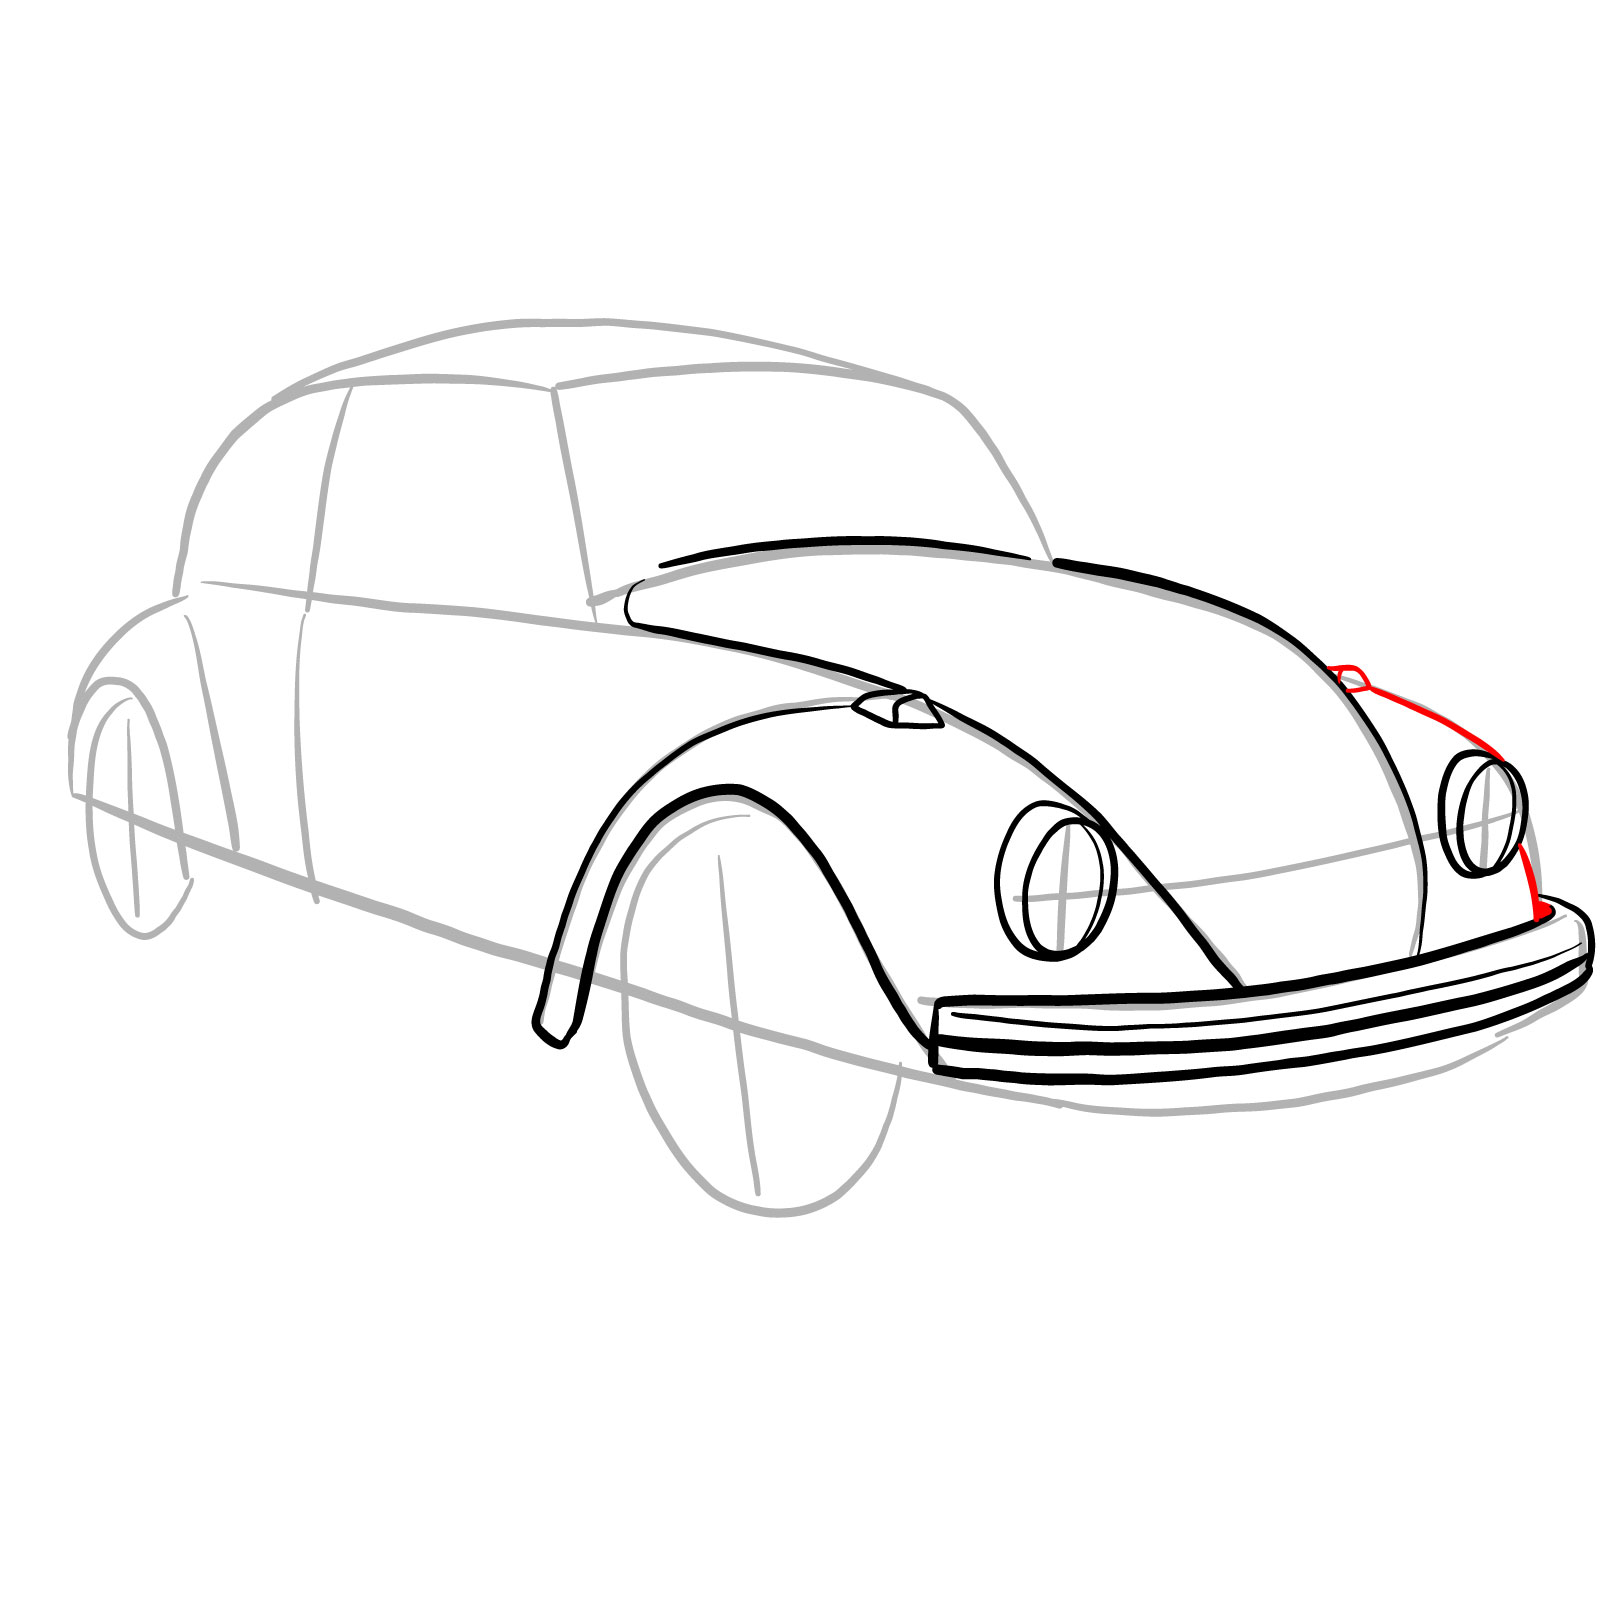 How to draw Volkswagen Beetle 1972 - step 14